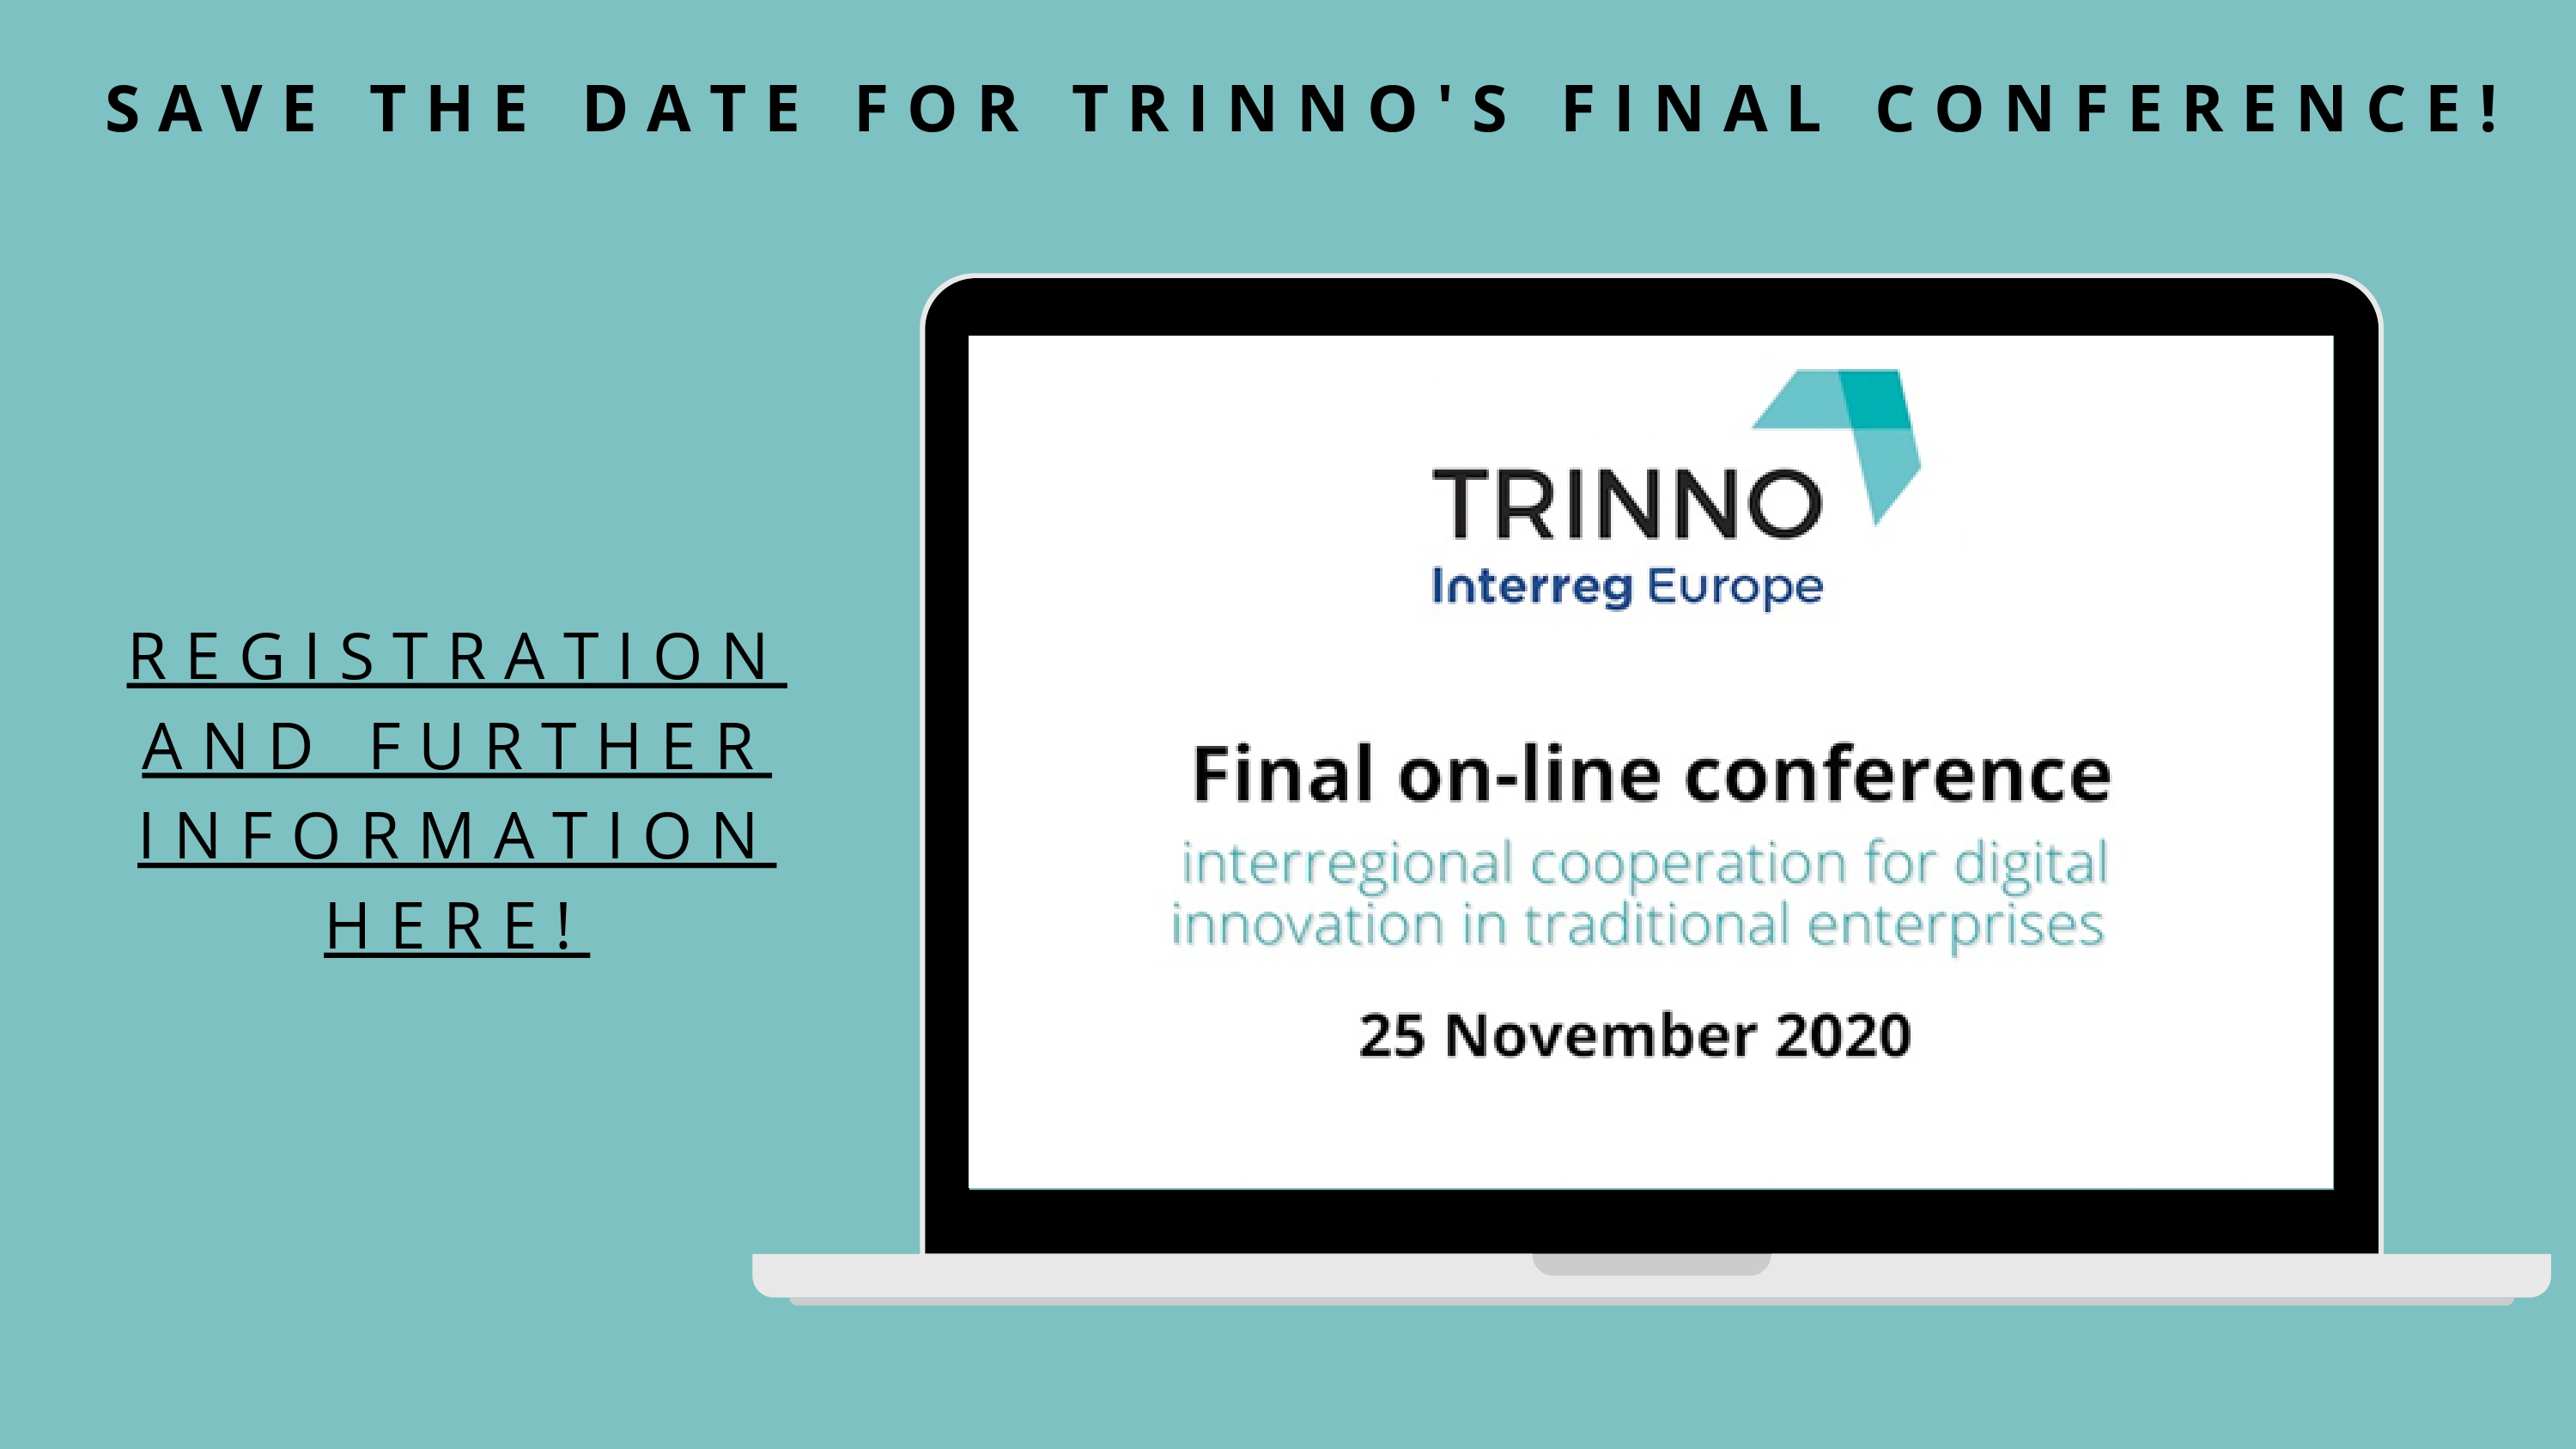 TRINNO Final Conference